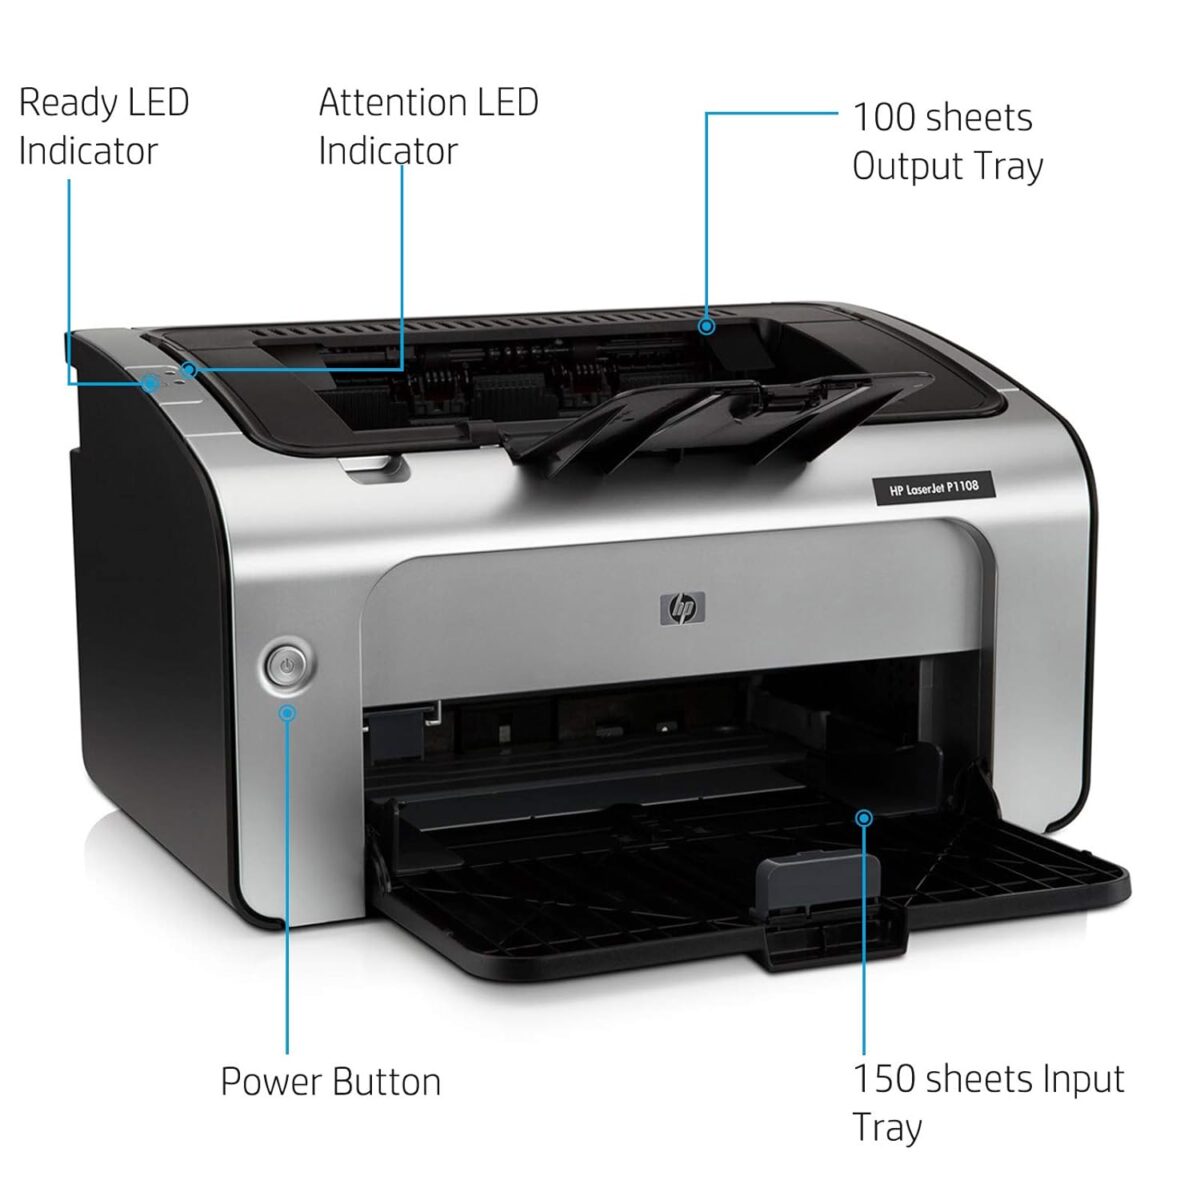 HP Laserjet P1108 Printer 1